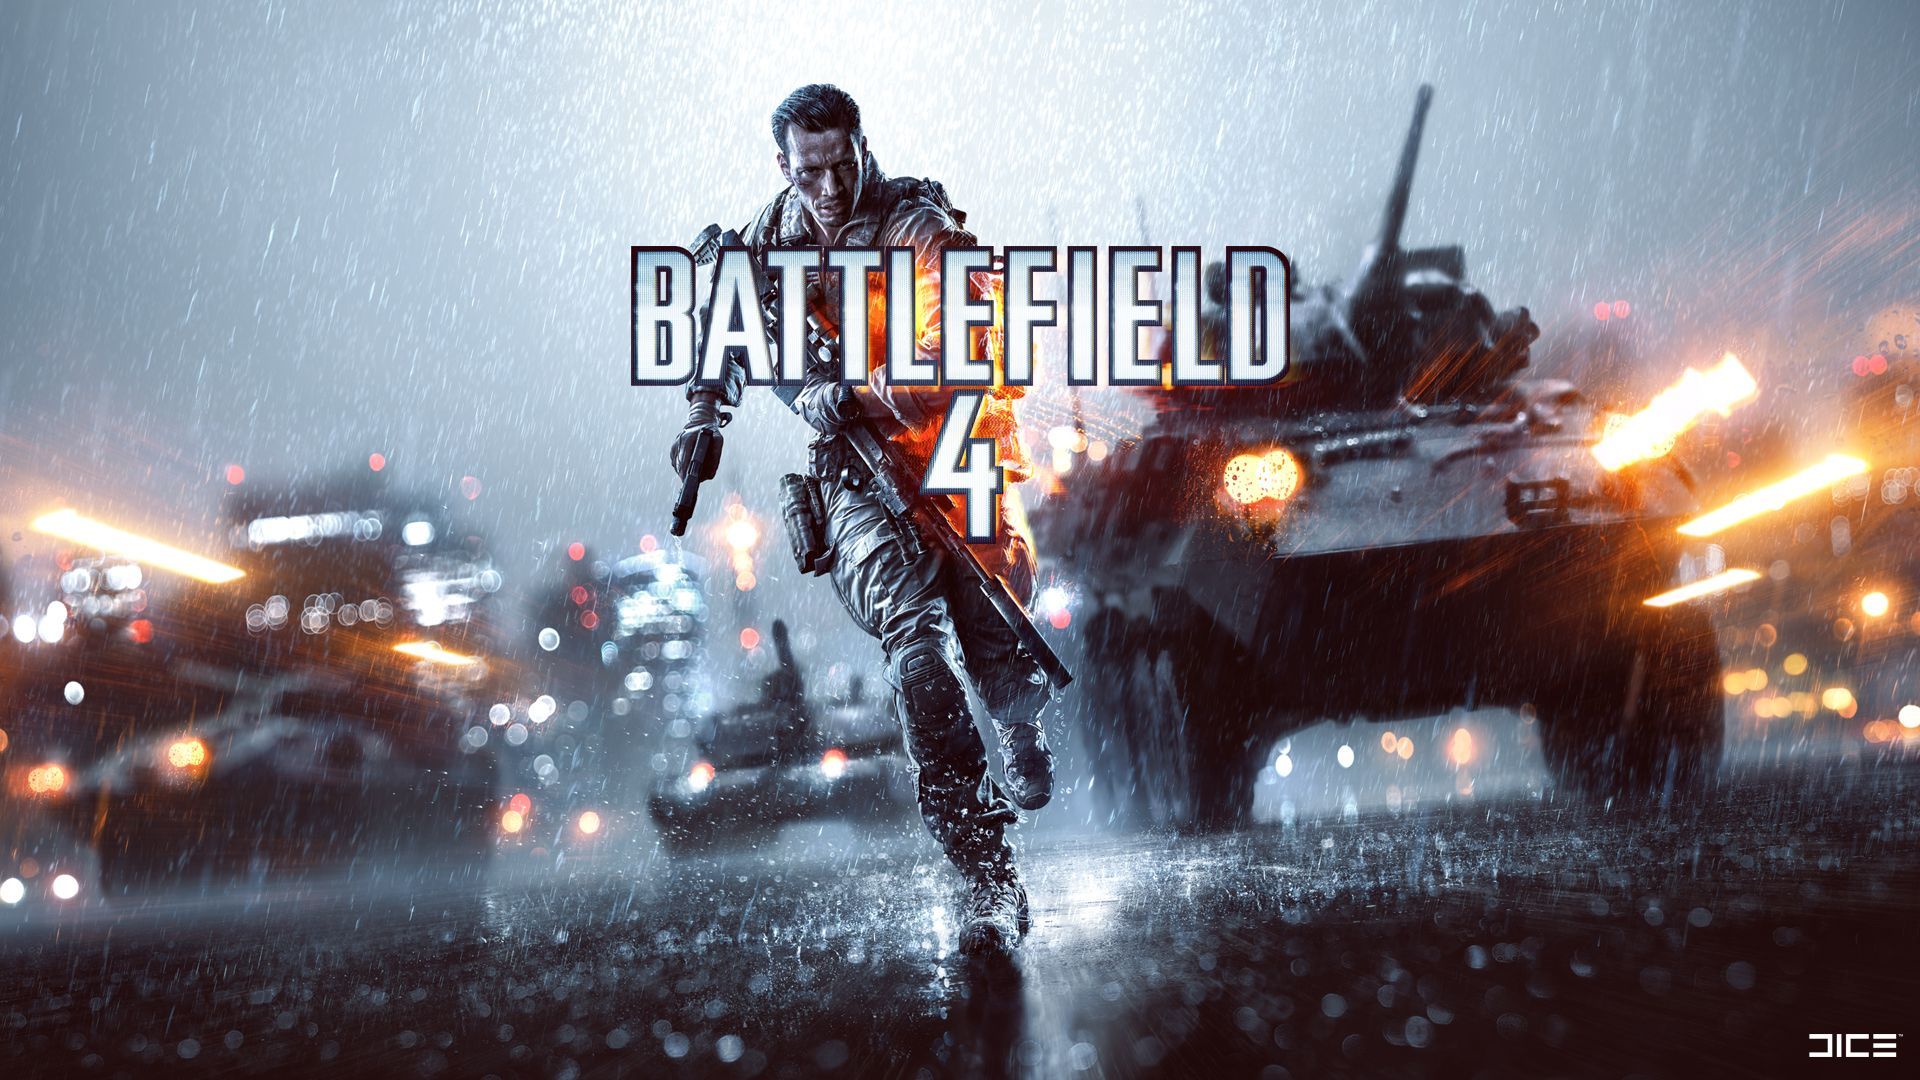 Battlefield 4 - Official Wallpaper V2 by MuuseDesign on DeviantArt